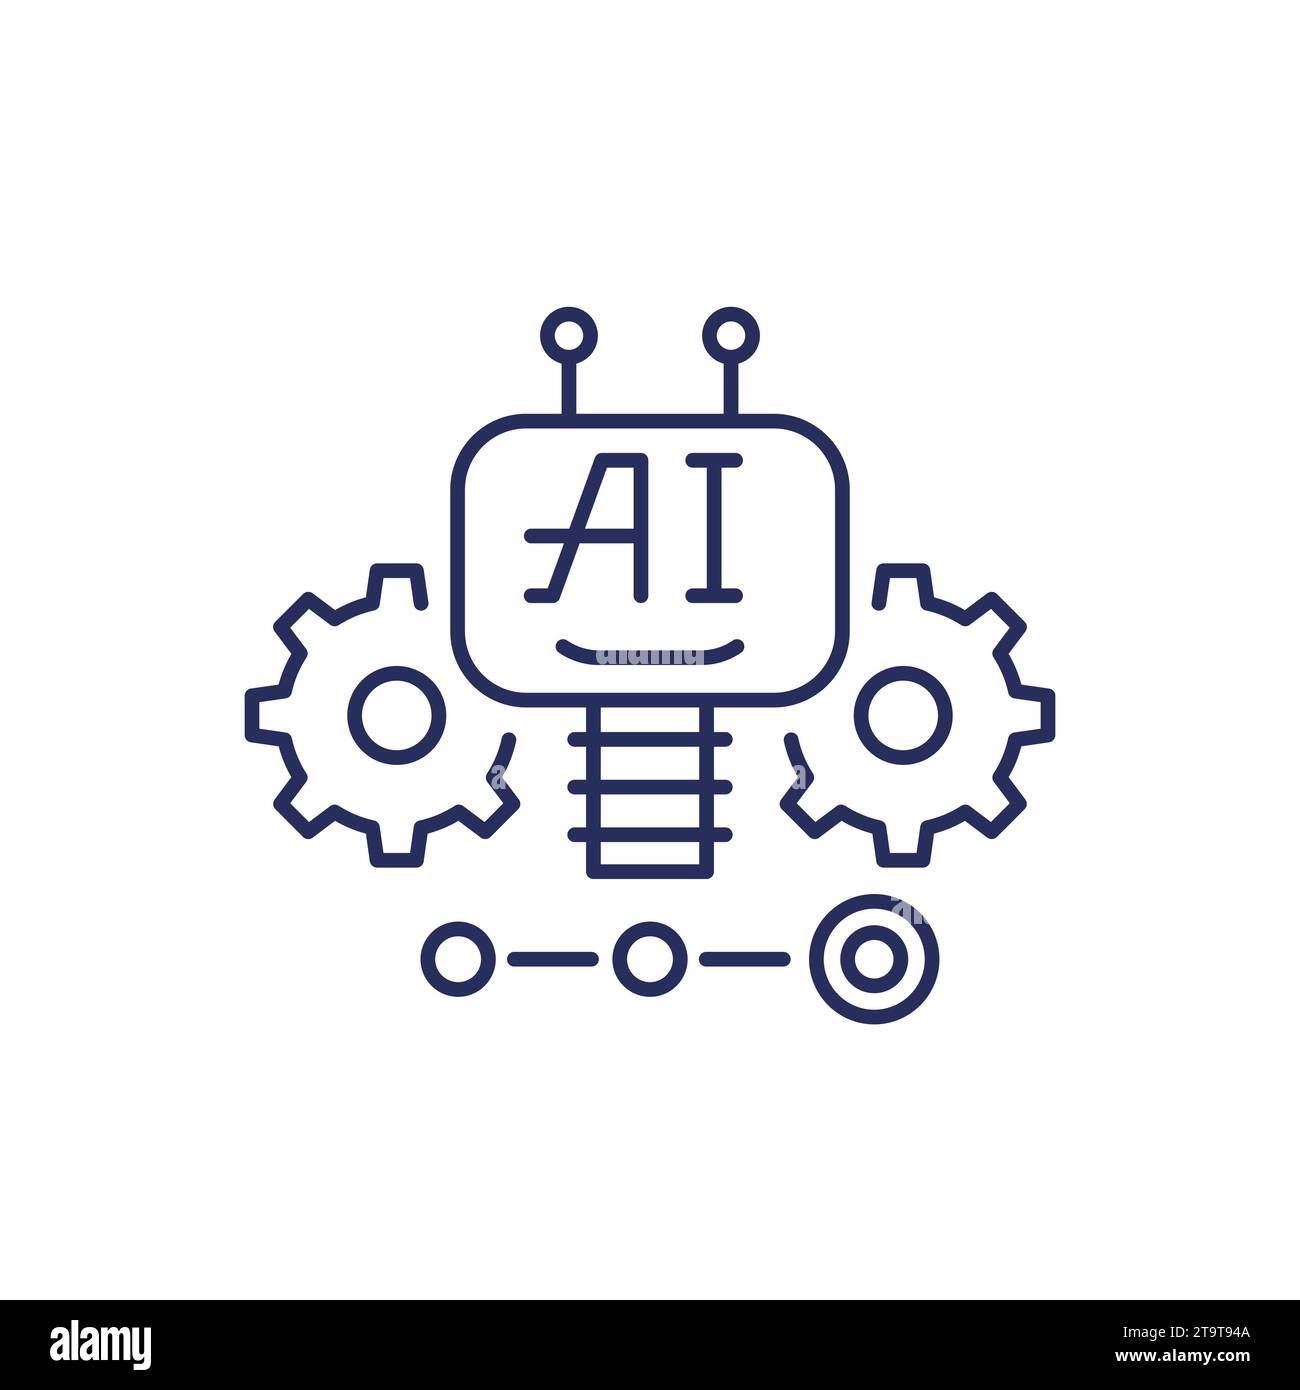 AI bot icon, Artificial intelligence line vector Stock Vector